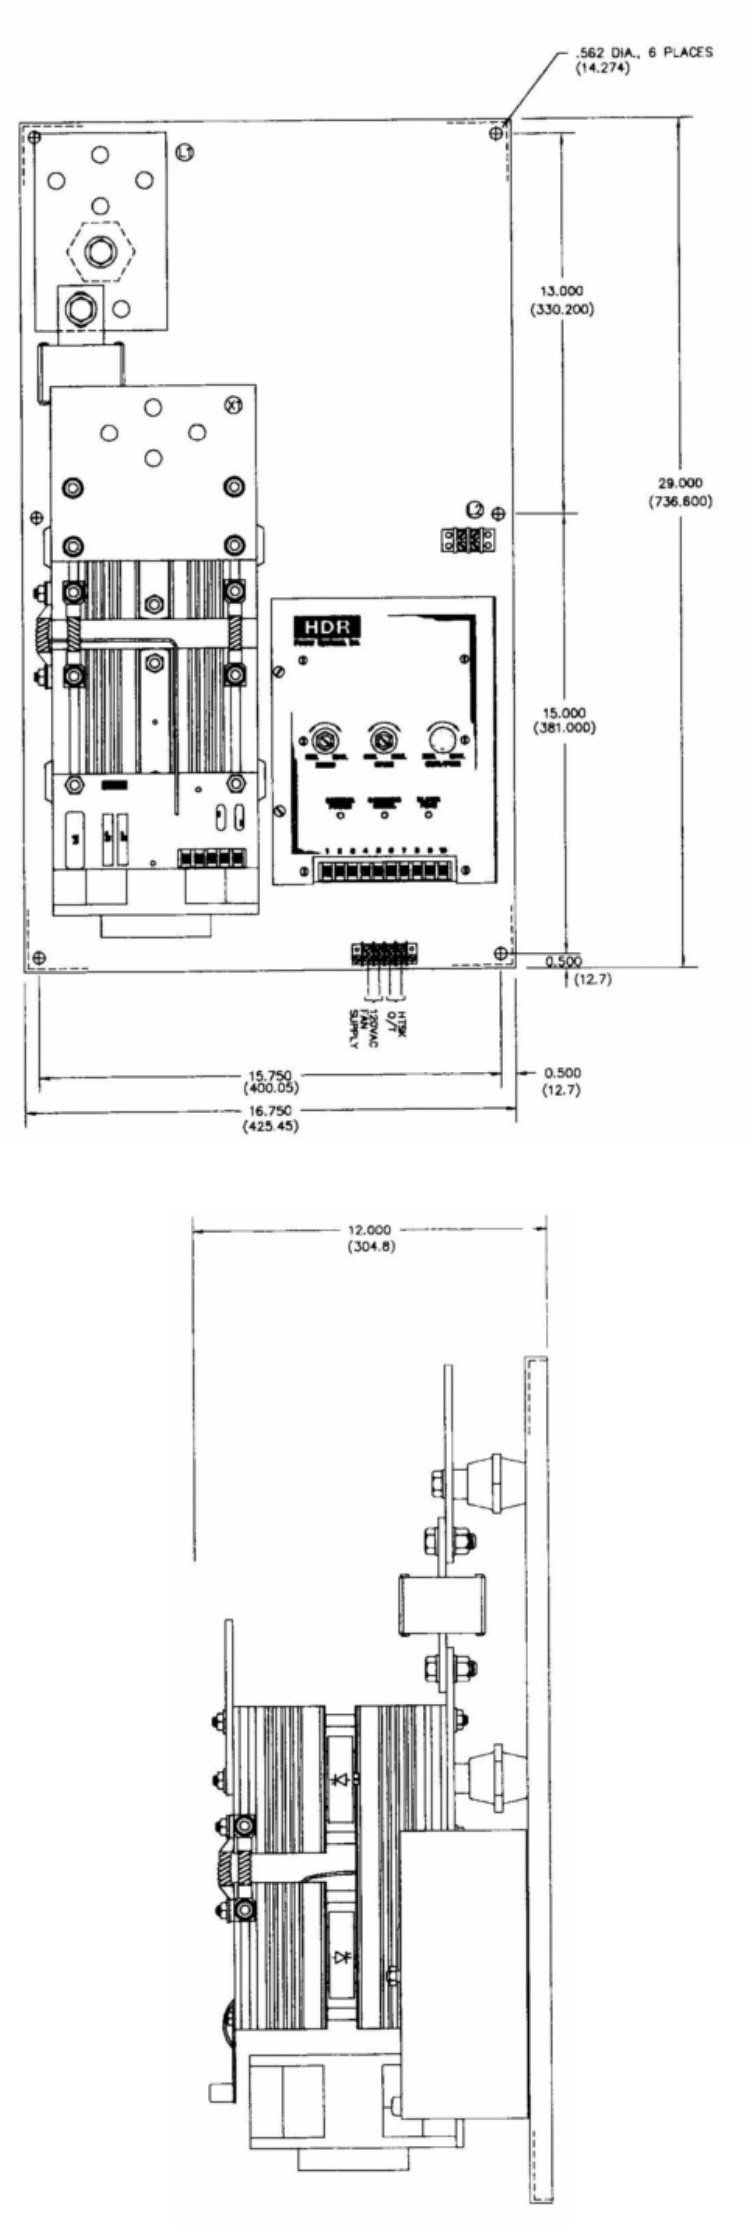 ZF1 SCR Power Control 800-1200A Dimensions